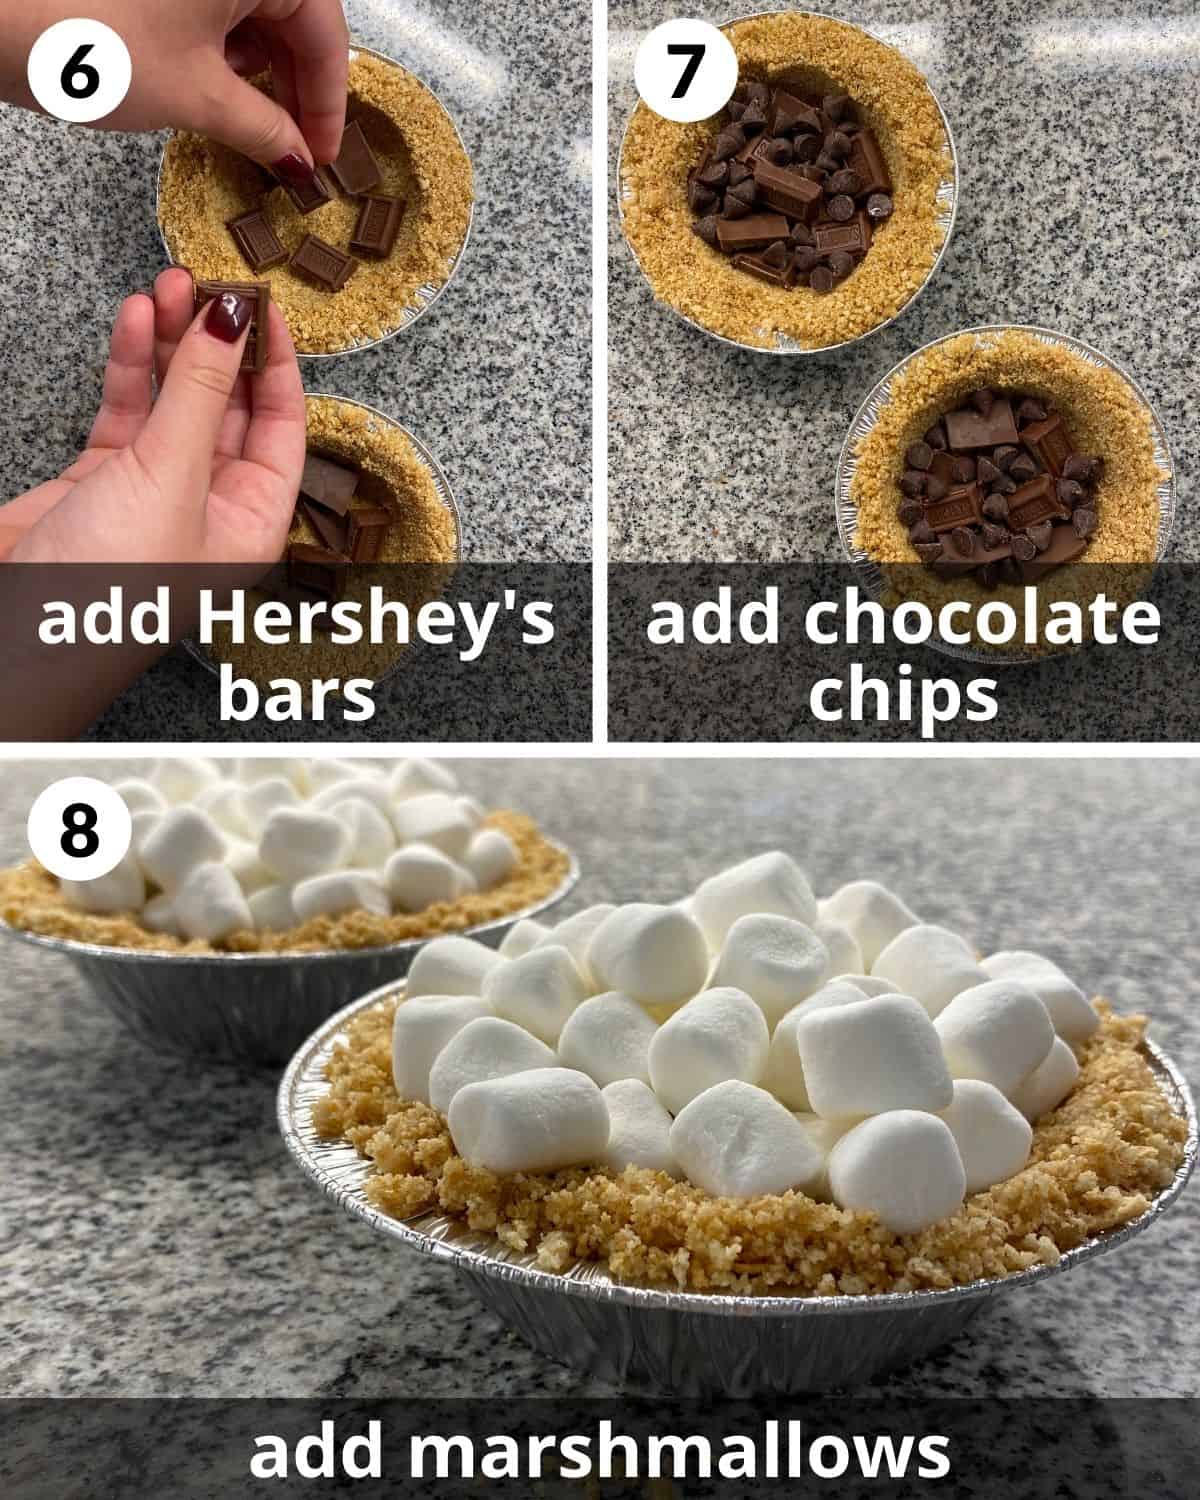 3 photos. Hershey's bars being broken. Chocolate in graham cracker crusts. Marshmallows on top.